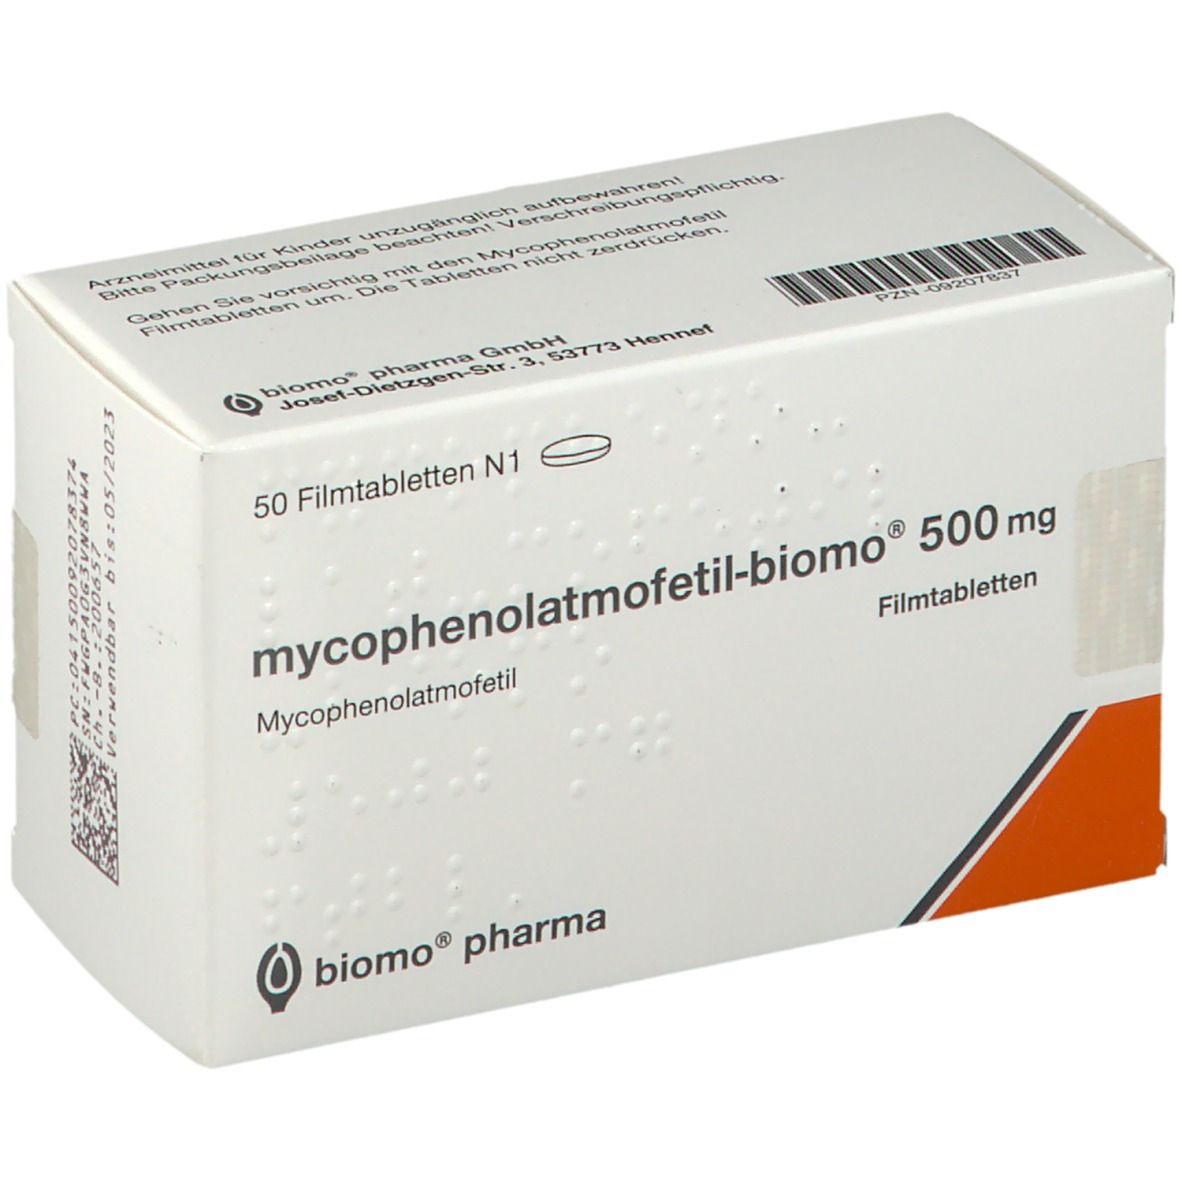 mycophenolatmofetil-biomo® 500 mg